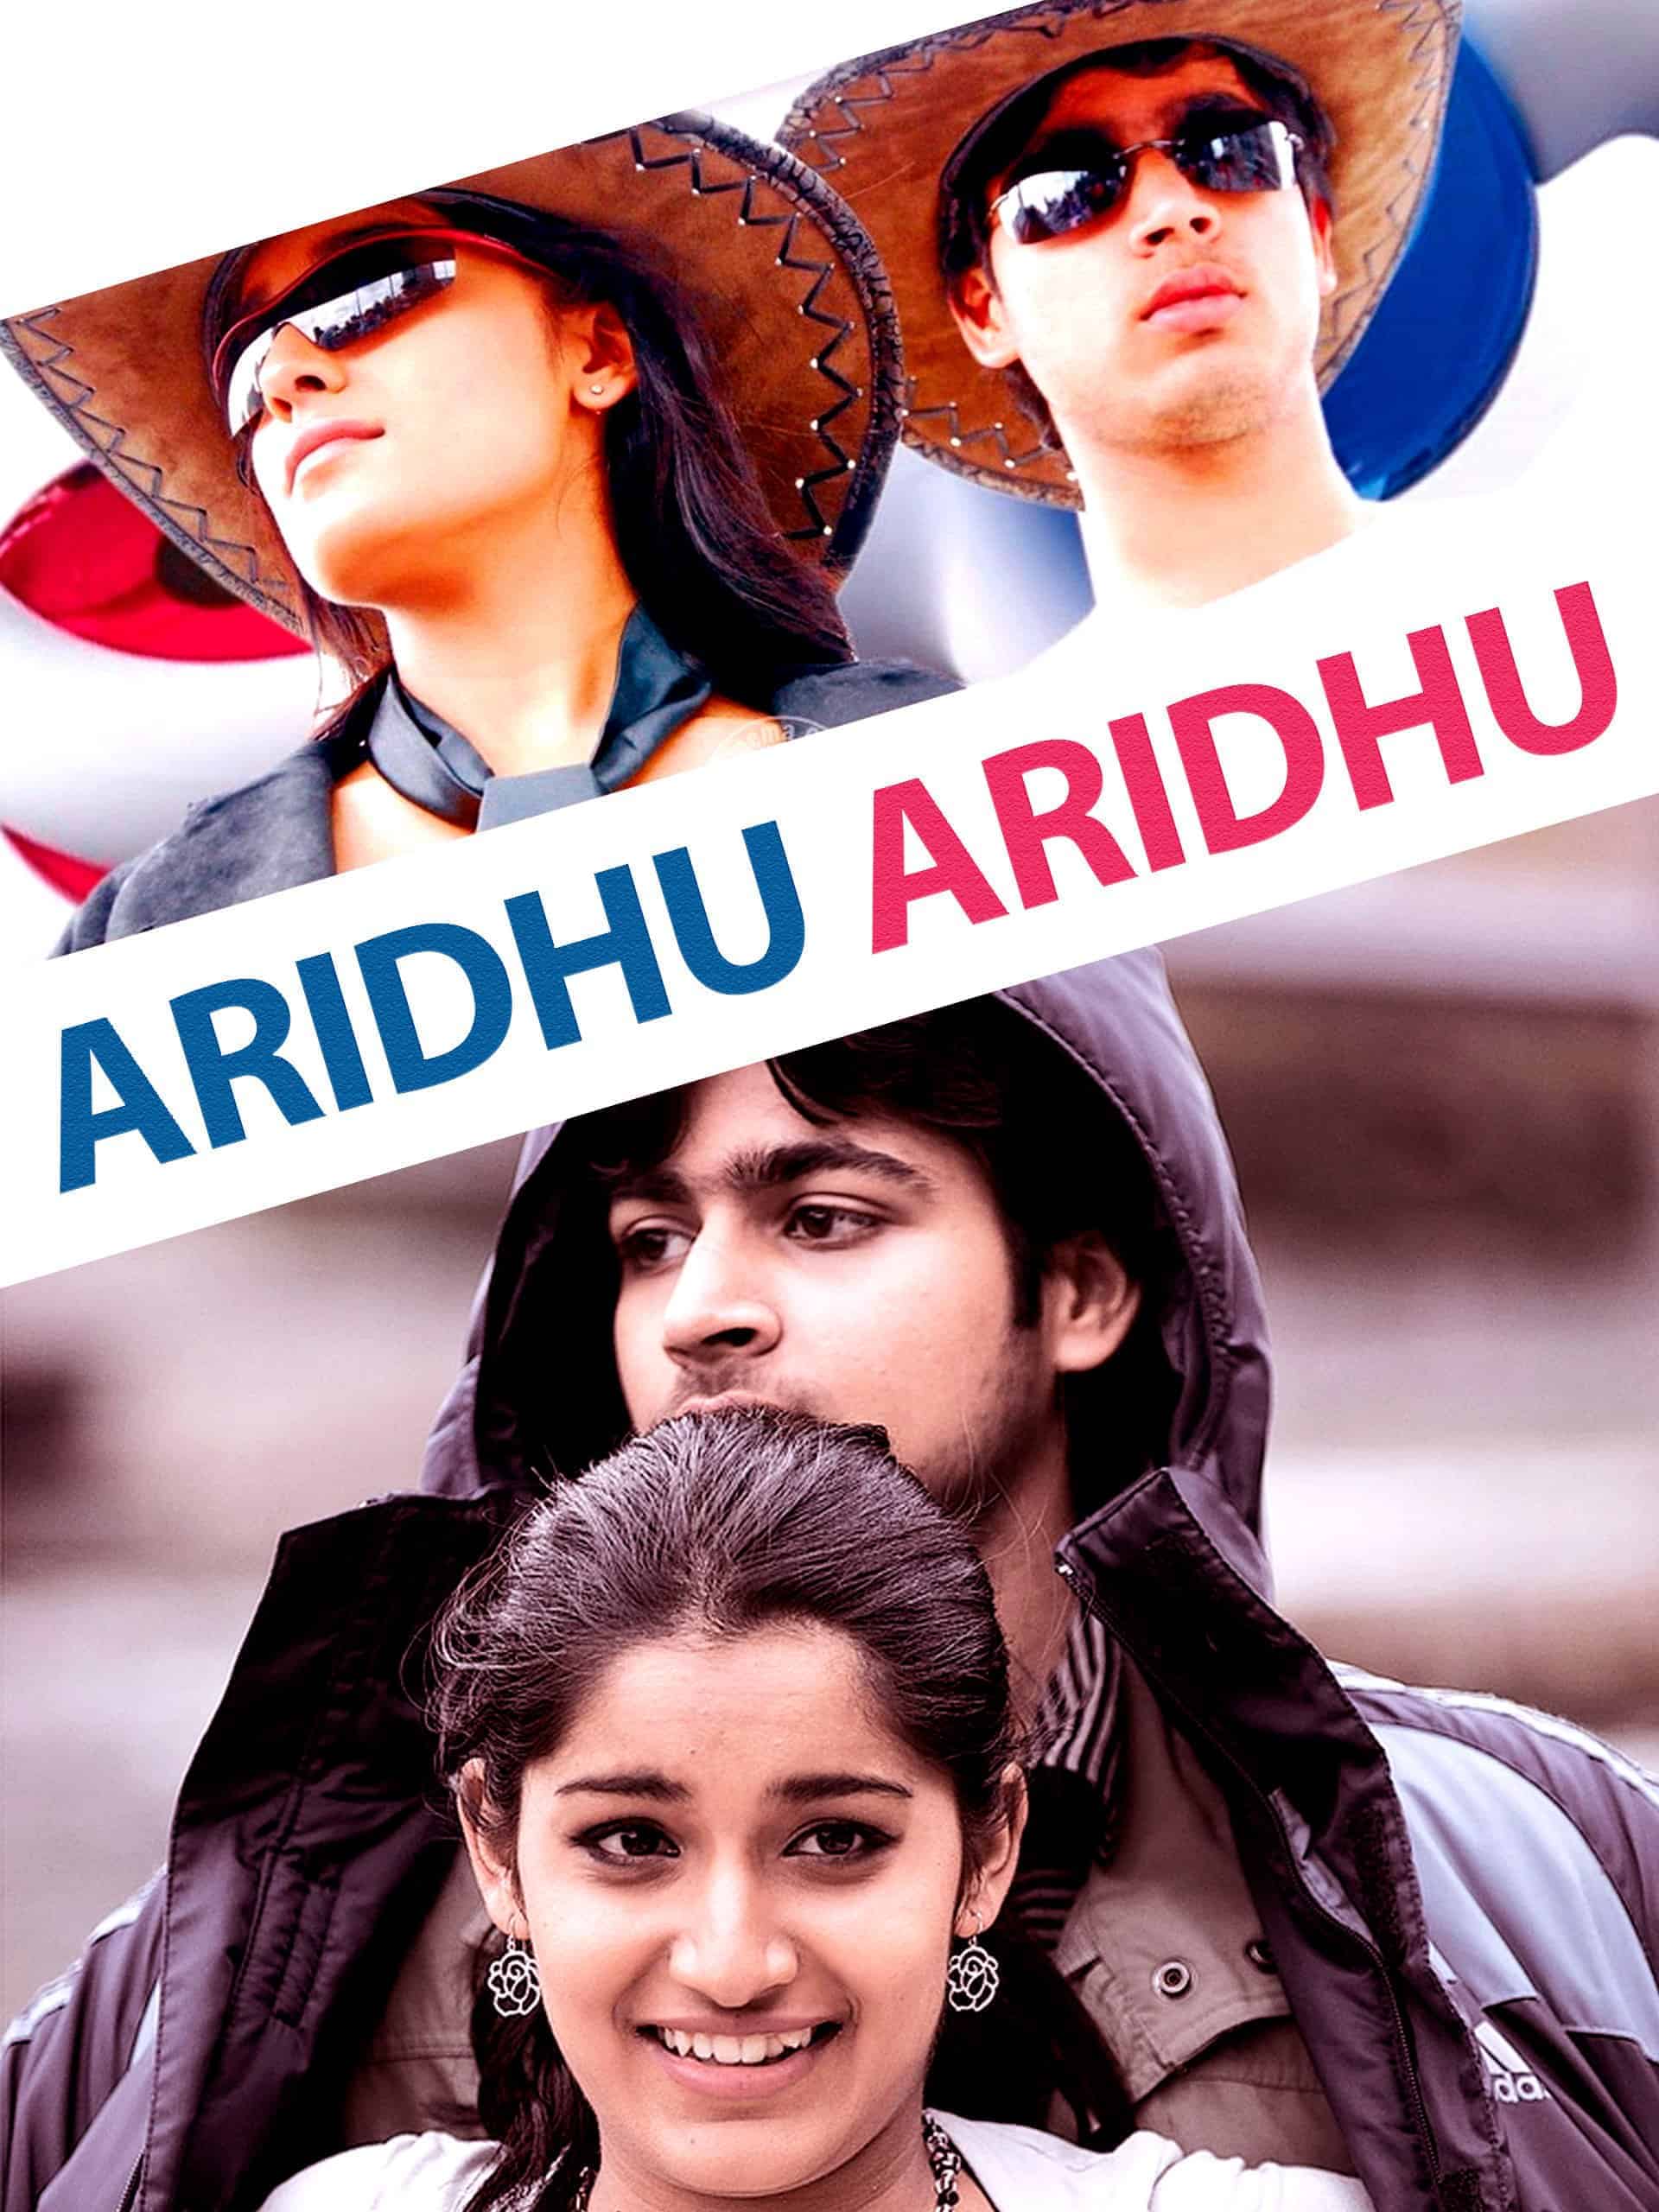 Aridhu Aridhu 2010 Tamil Drama Movie Online